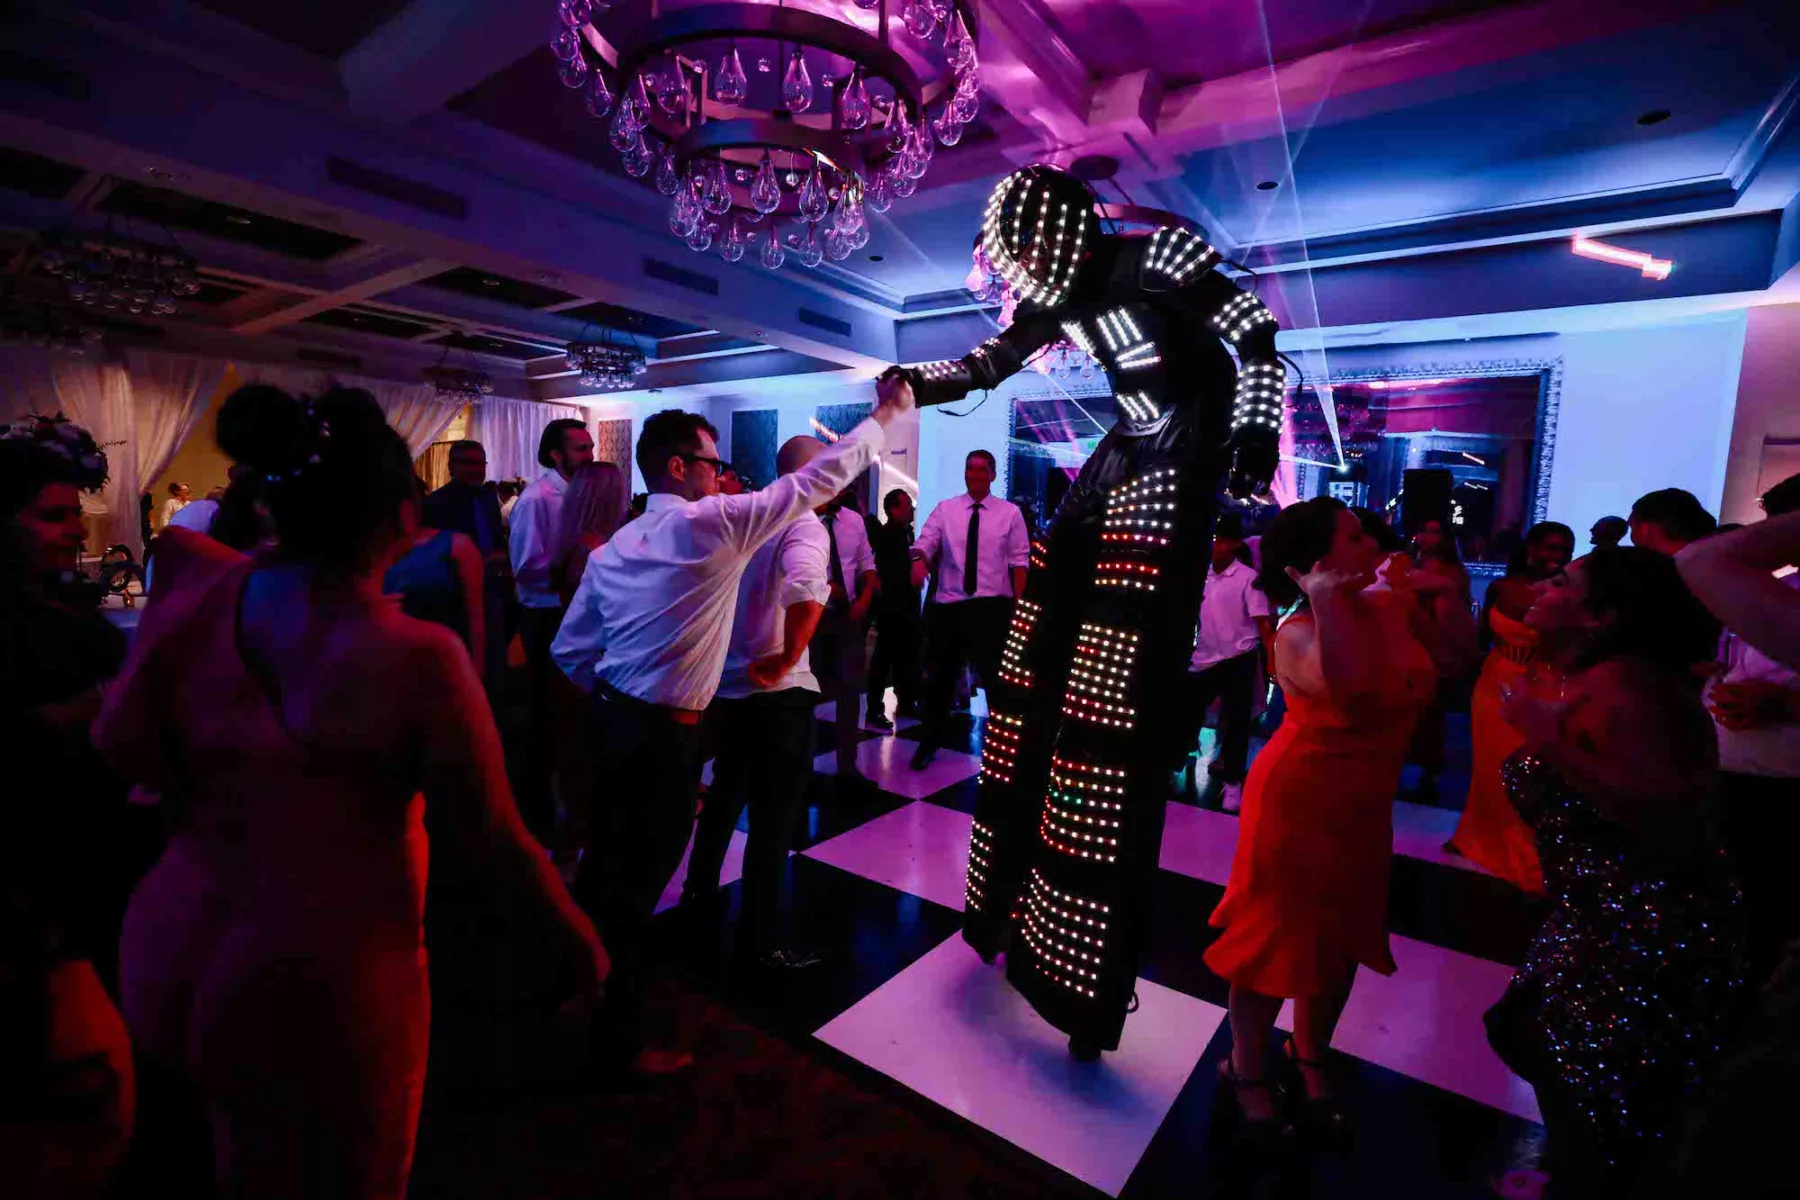 Robot on Stilts Wedding Reception Entertainment Inspiration